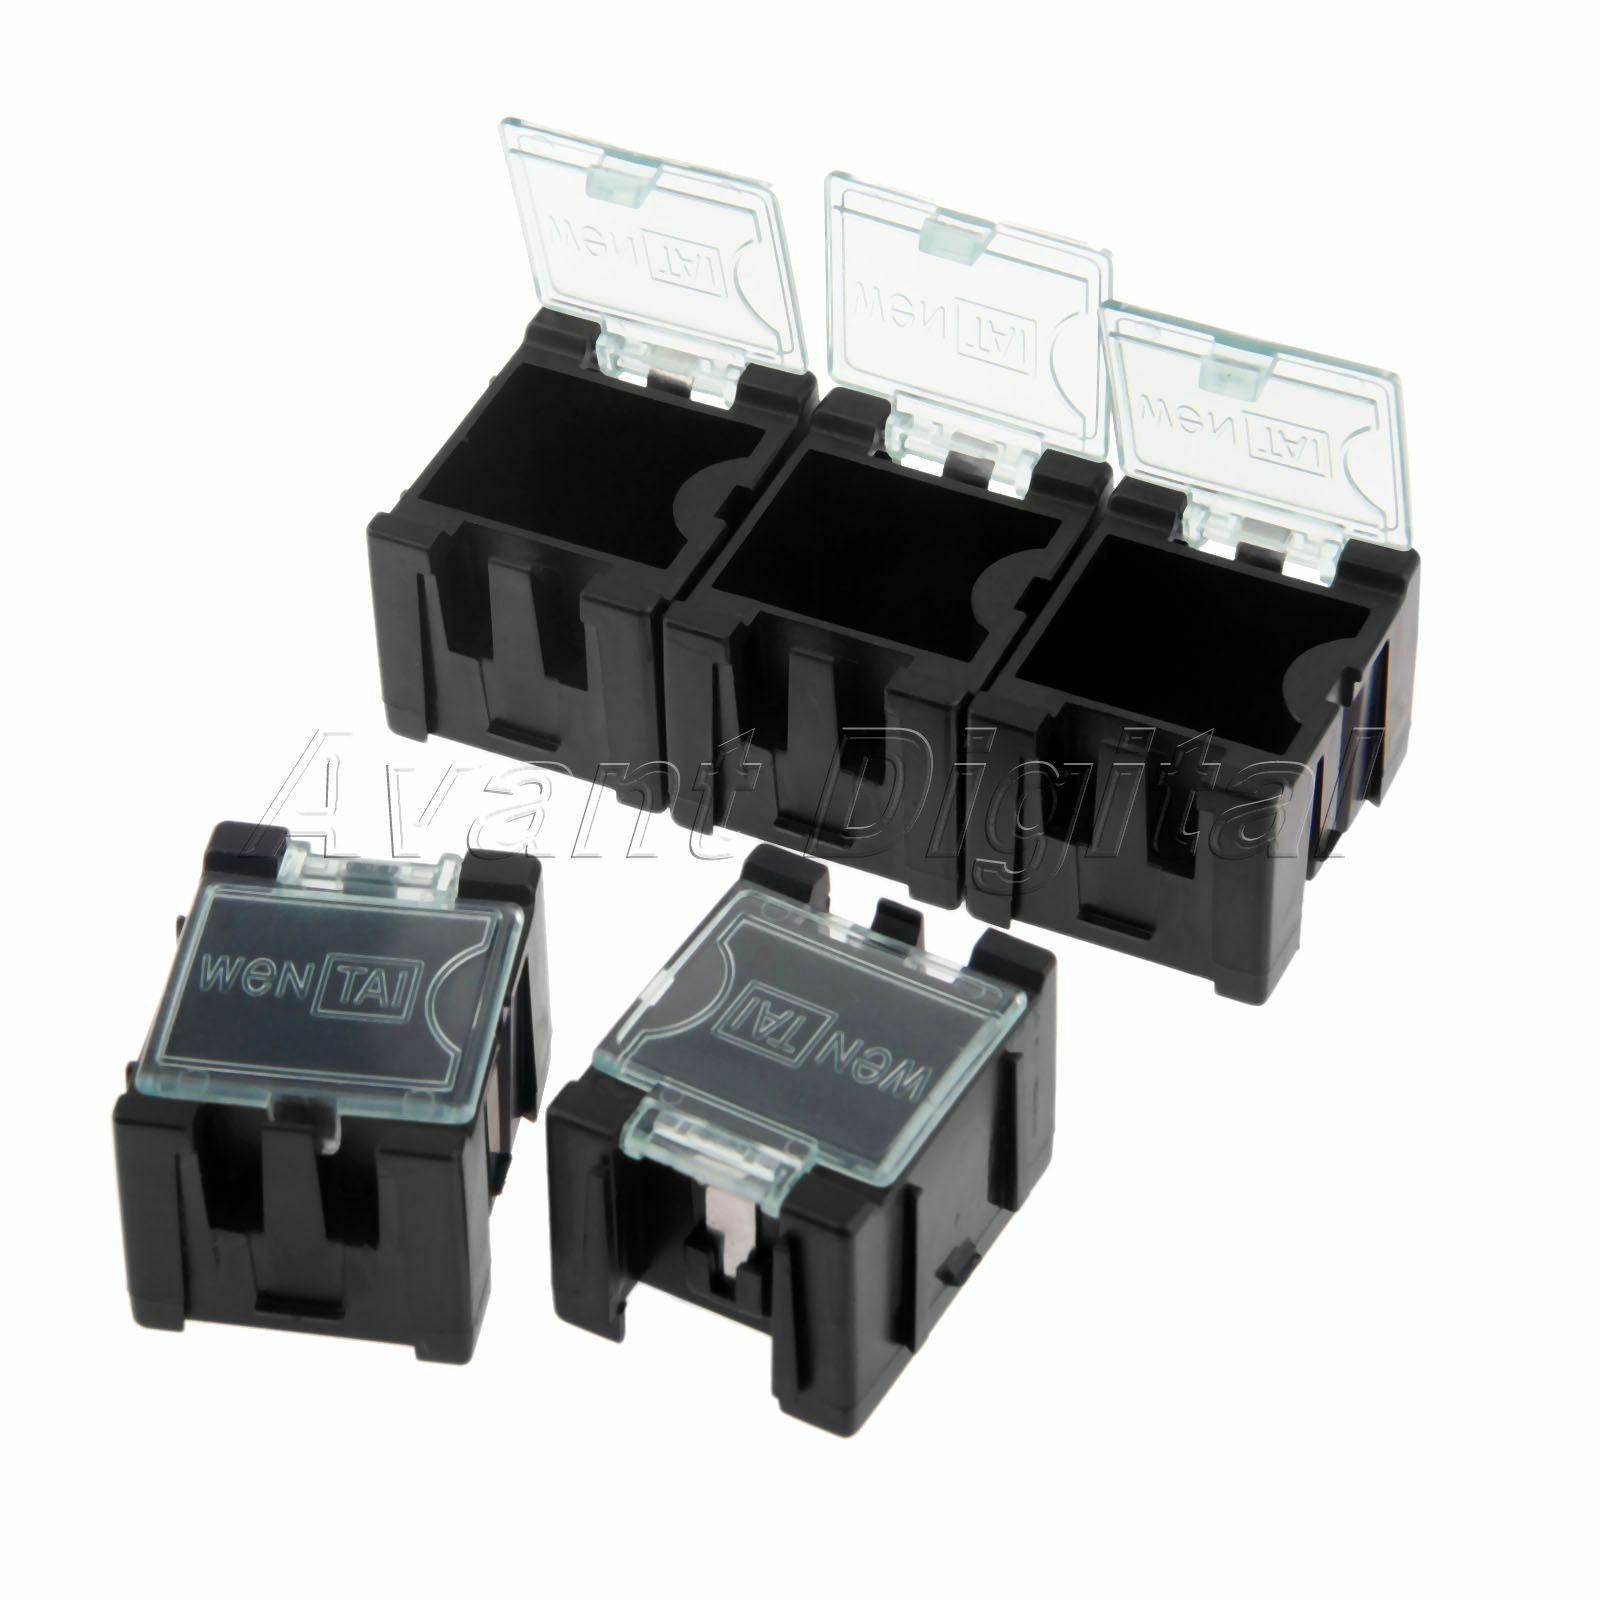 10PC Components Part Laboratory Storage Electronic SMD Box SMT Anti-Static Black